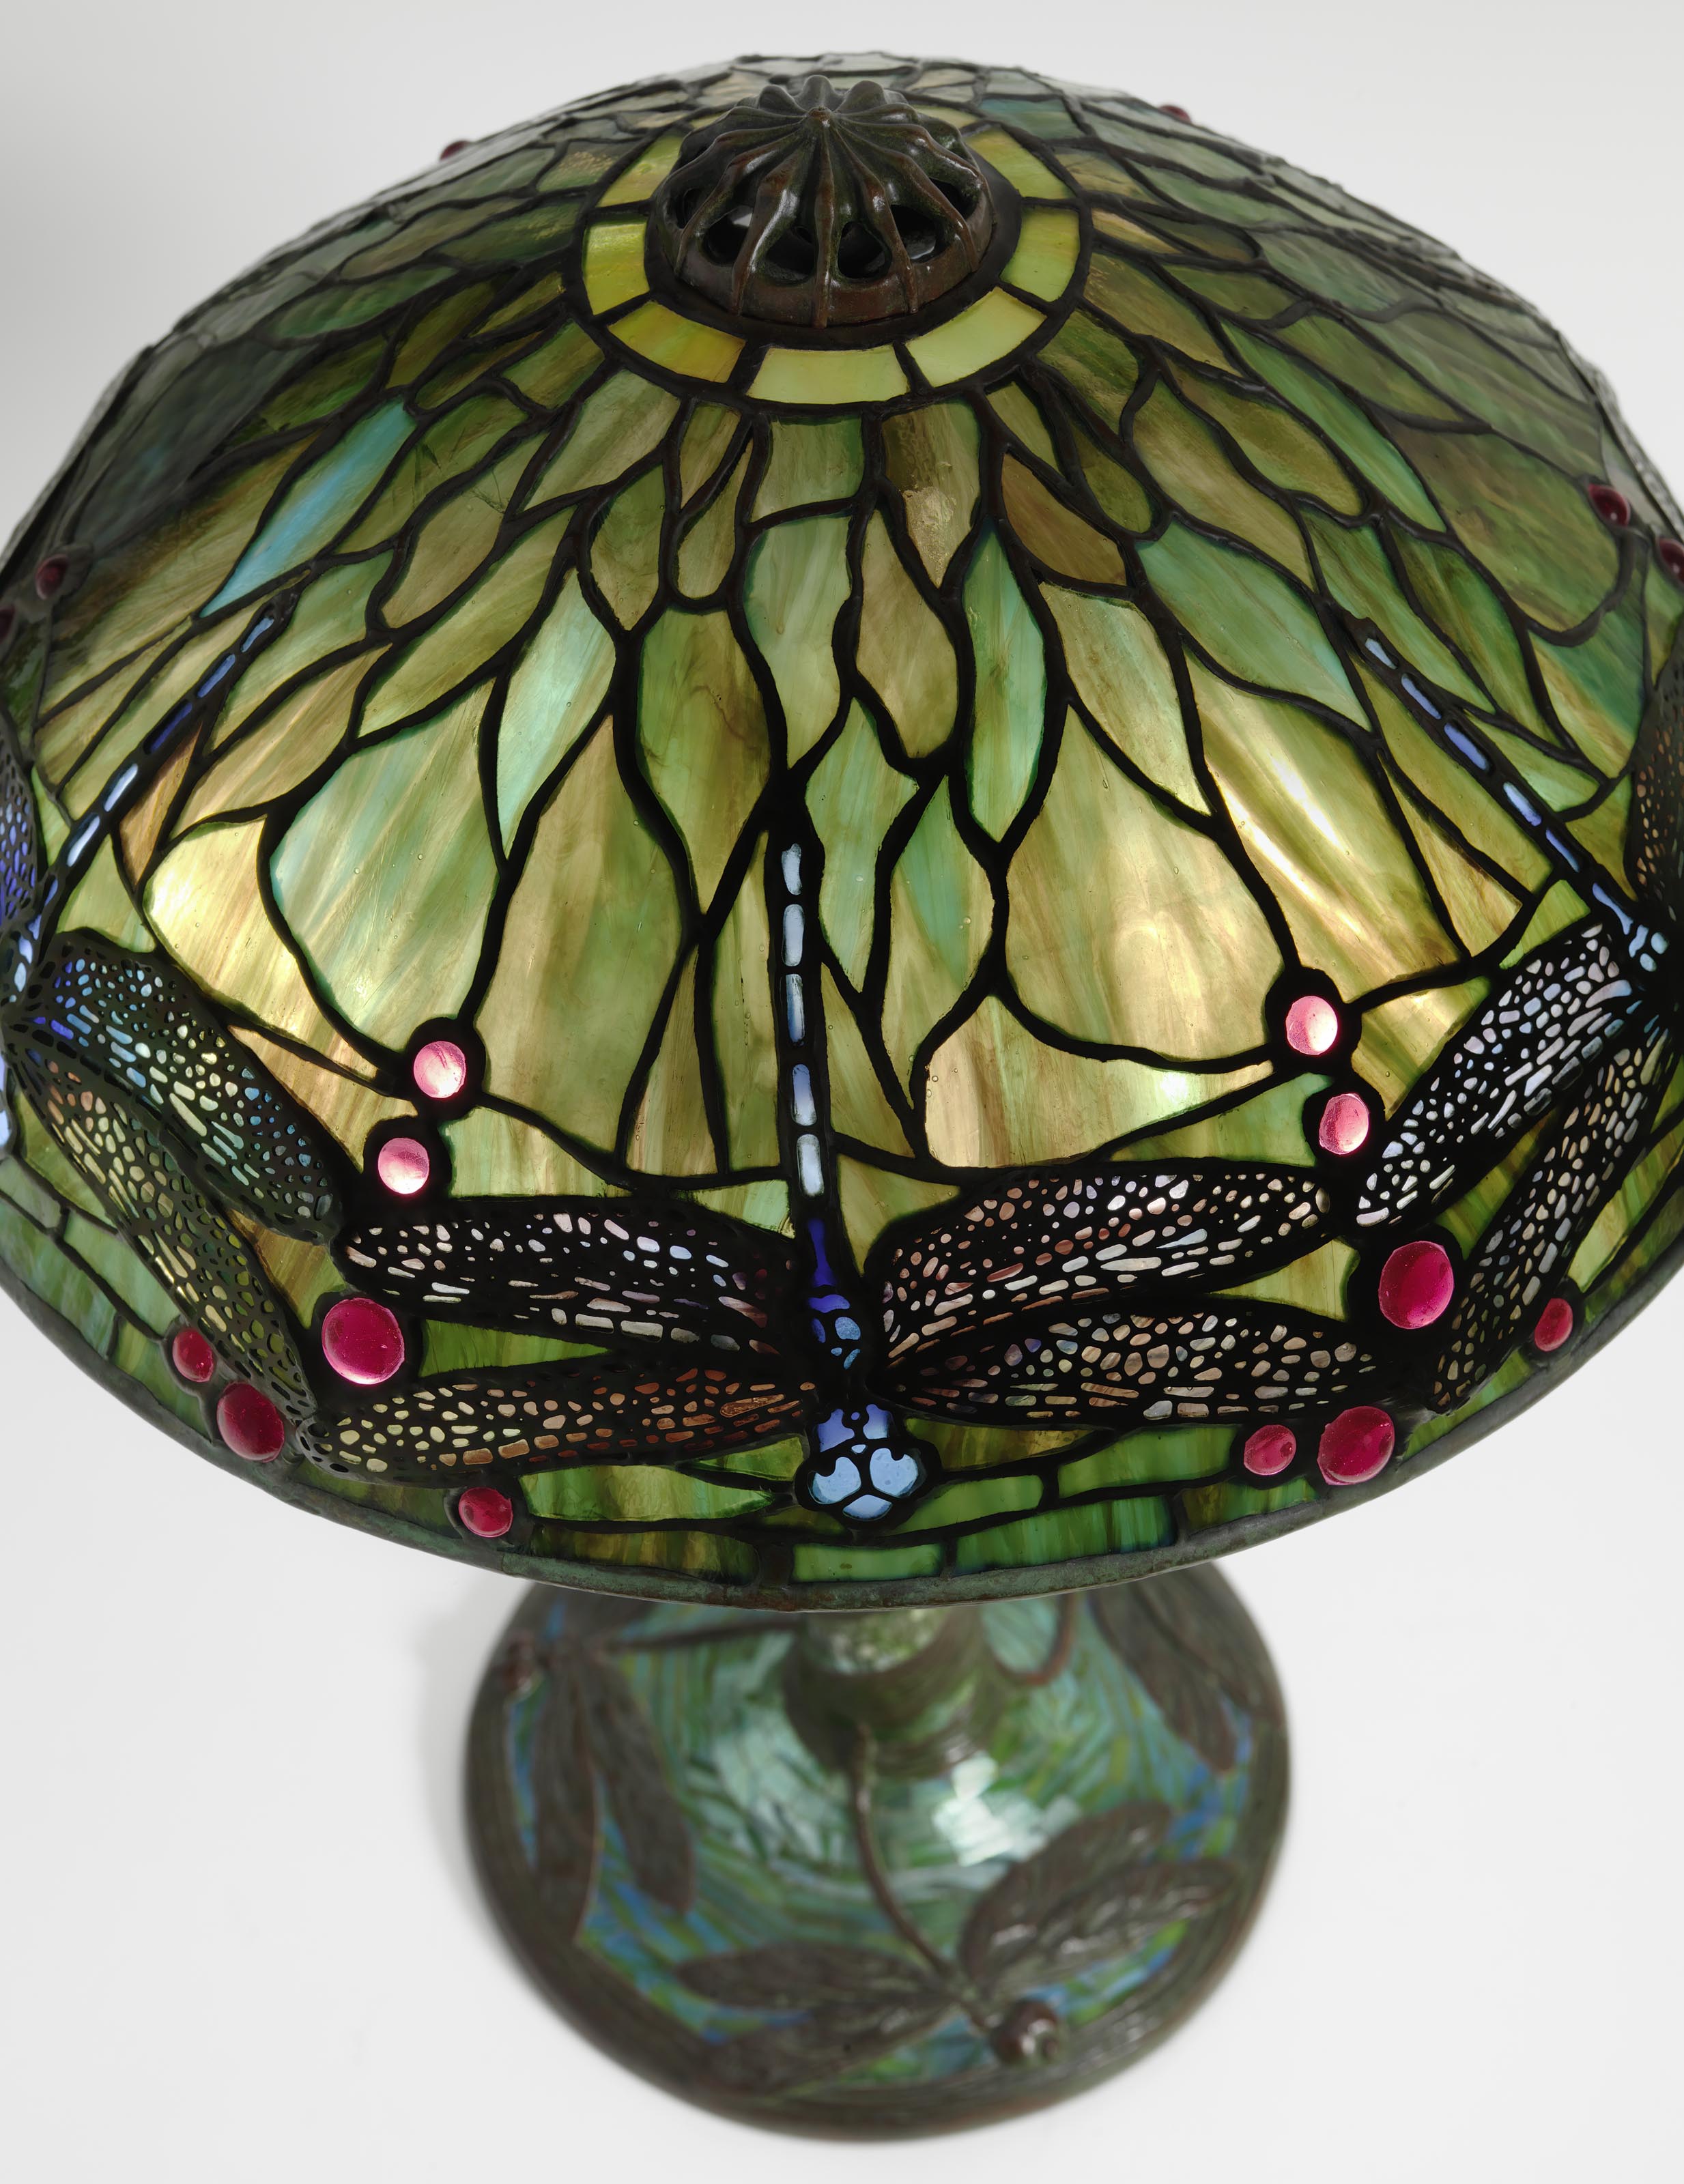 Tiffany Studios Dragonfly Lamp detail view